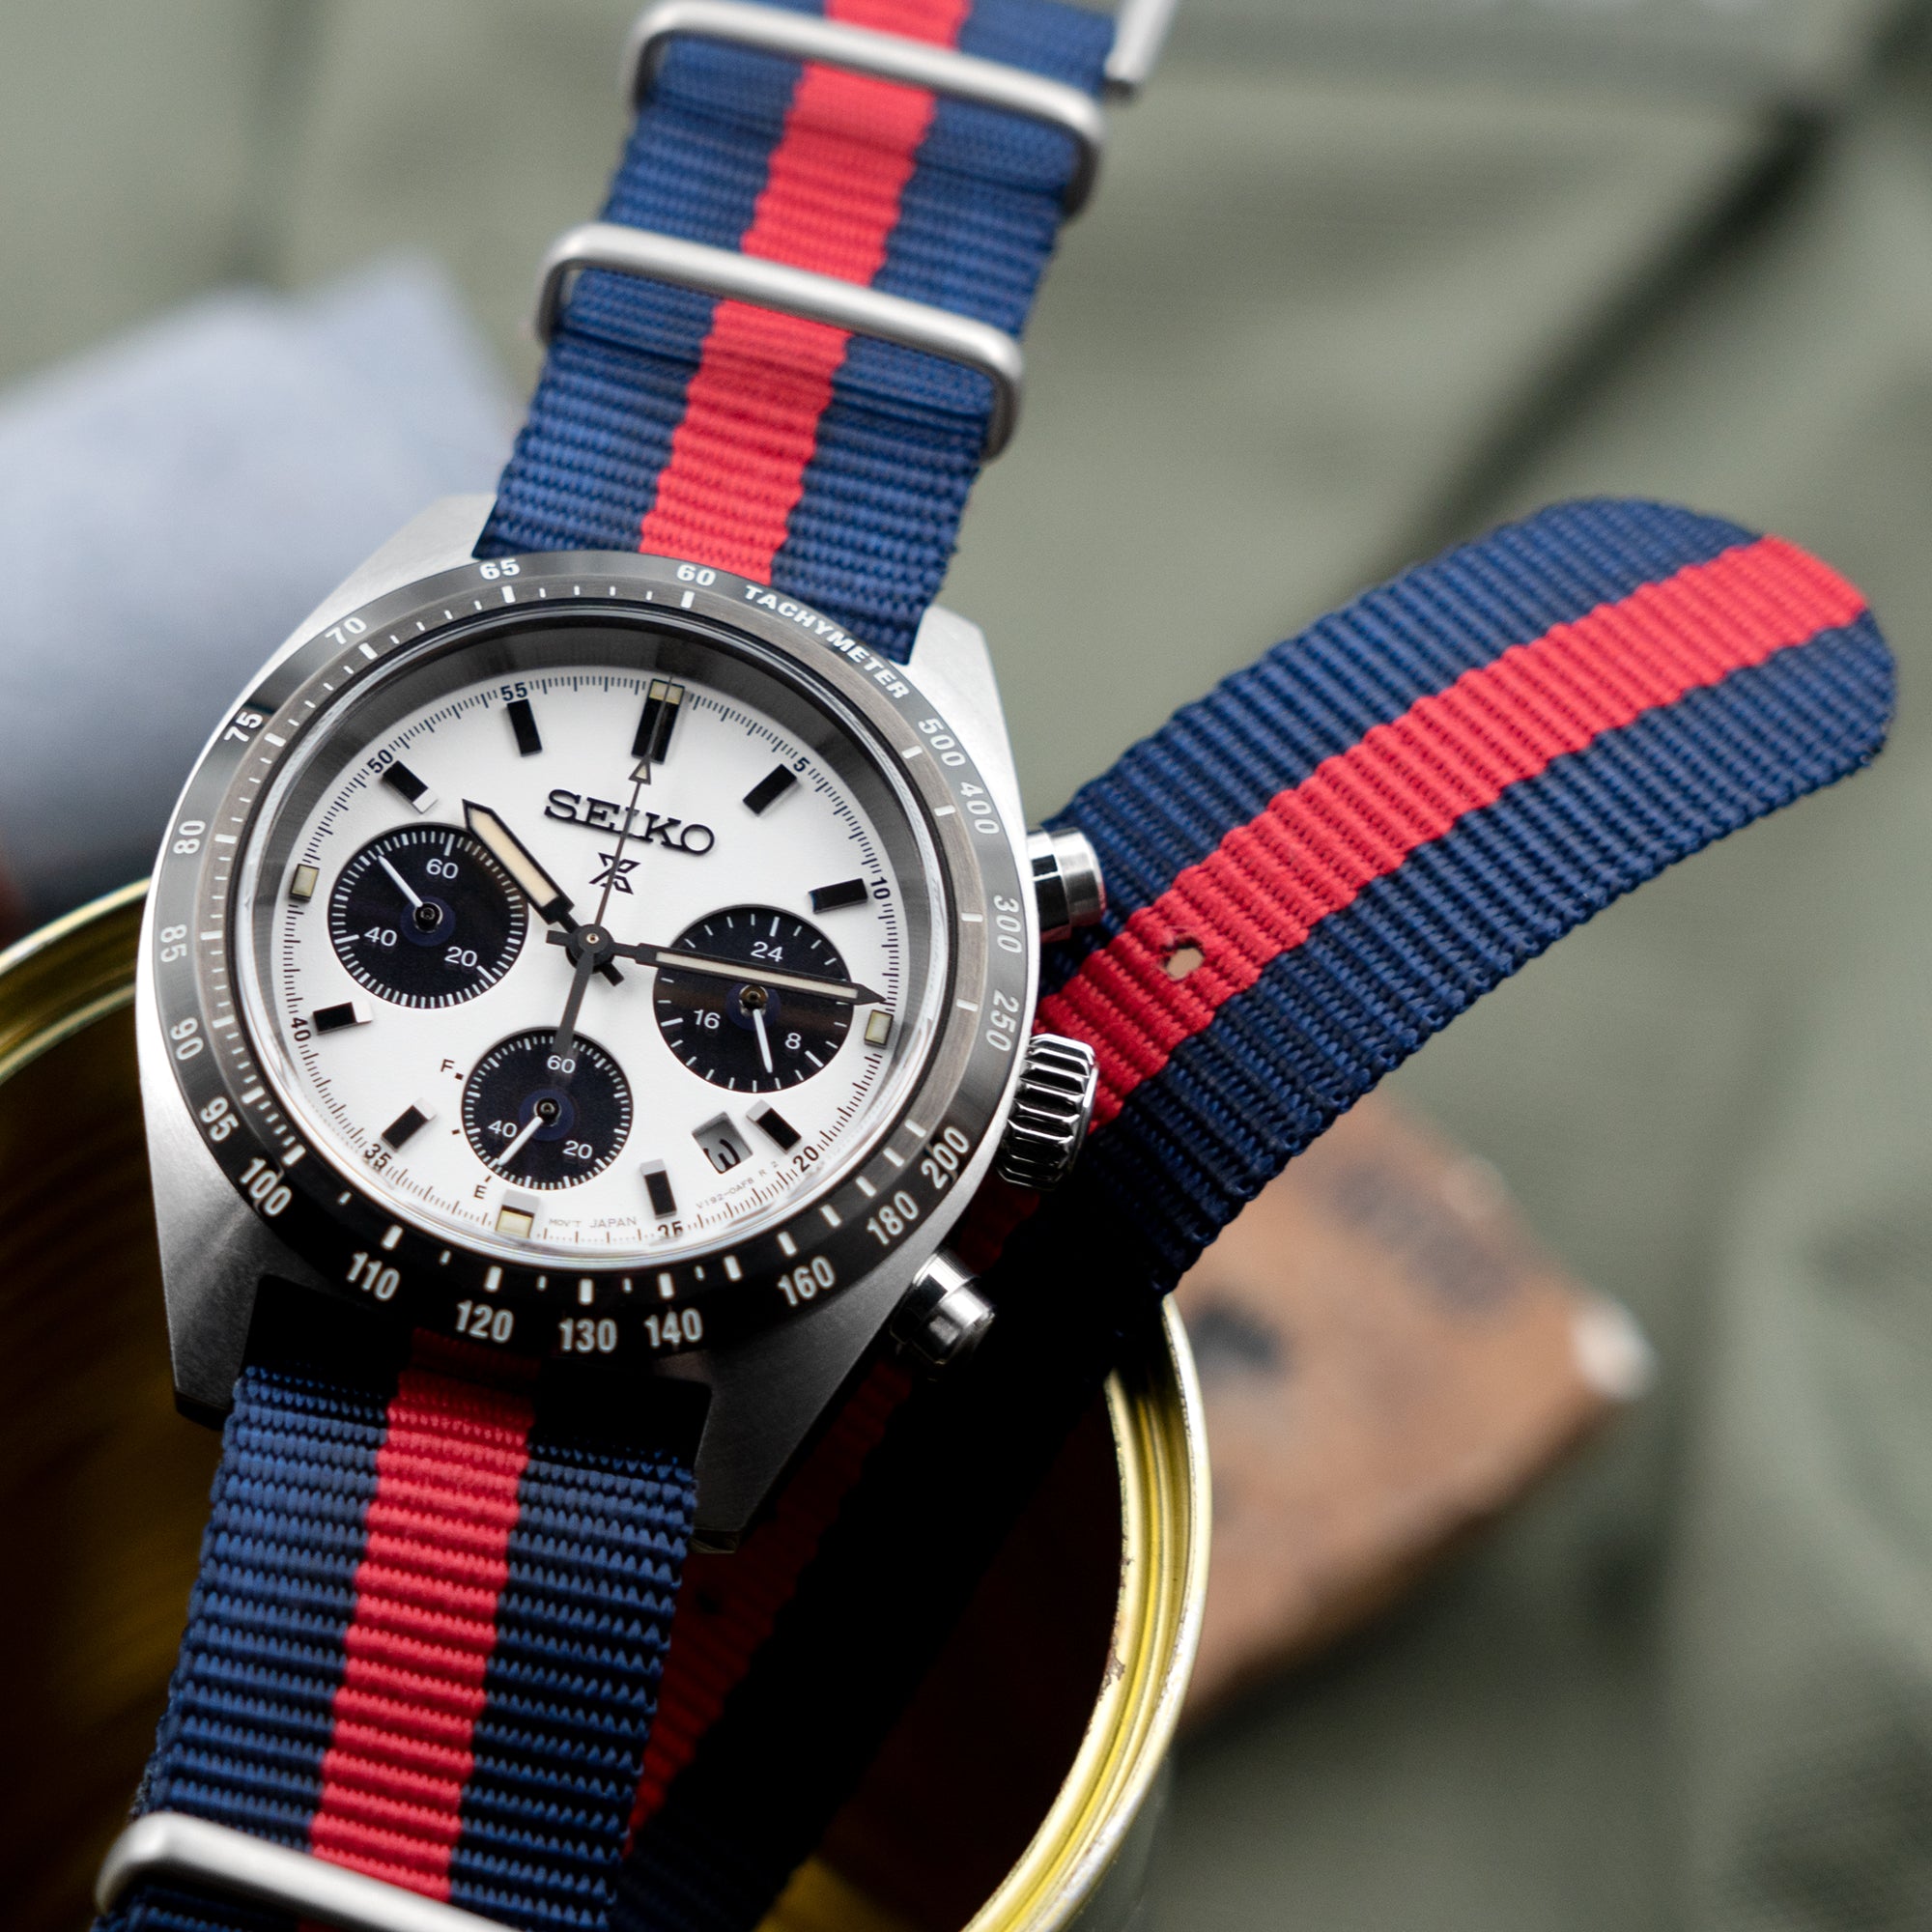 MiLTAT 20mm G10 military watch strap ballistic nylon armband, Brushed - Red & Blue Stripes